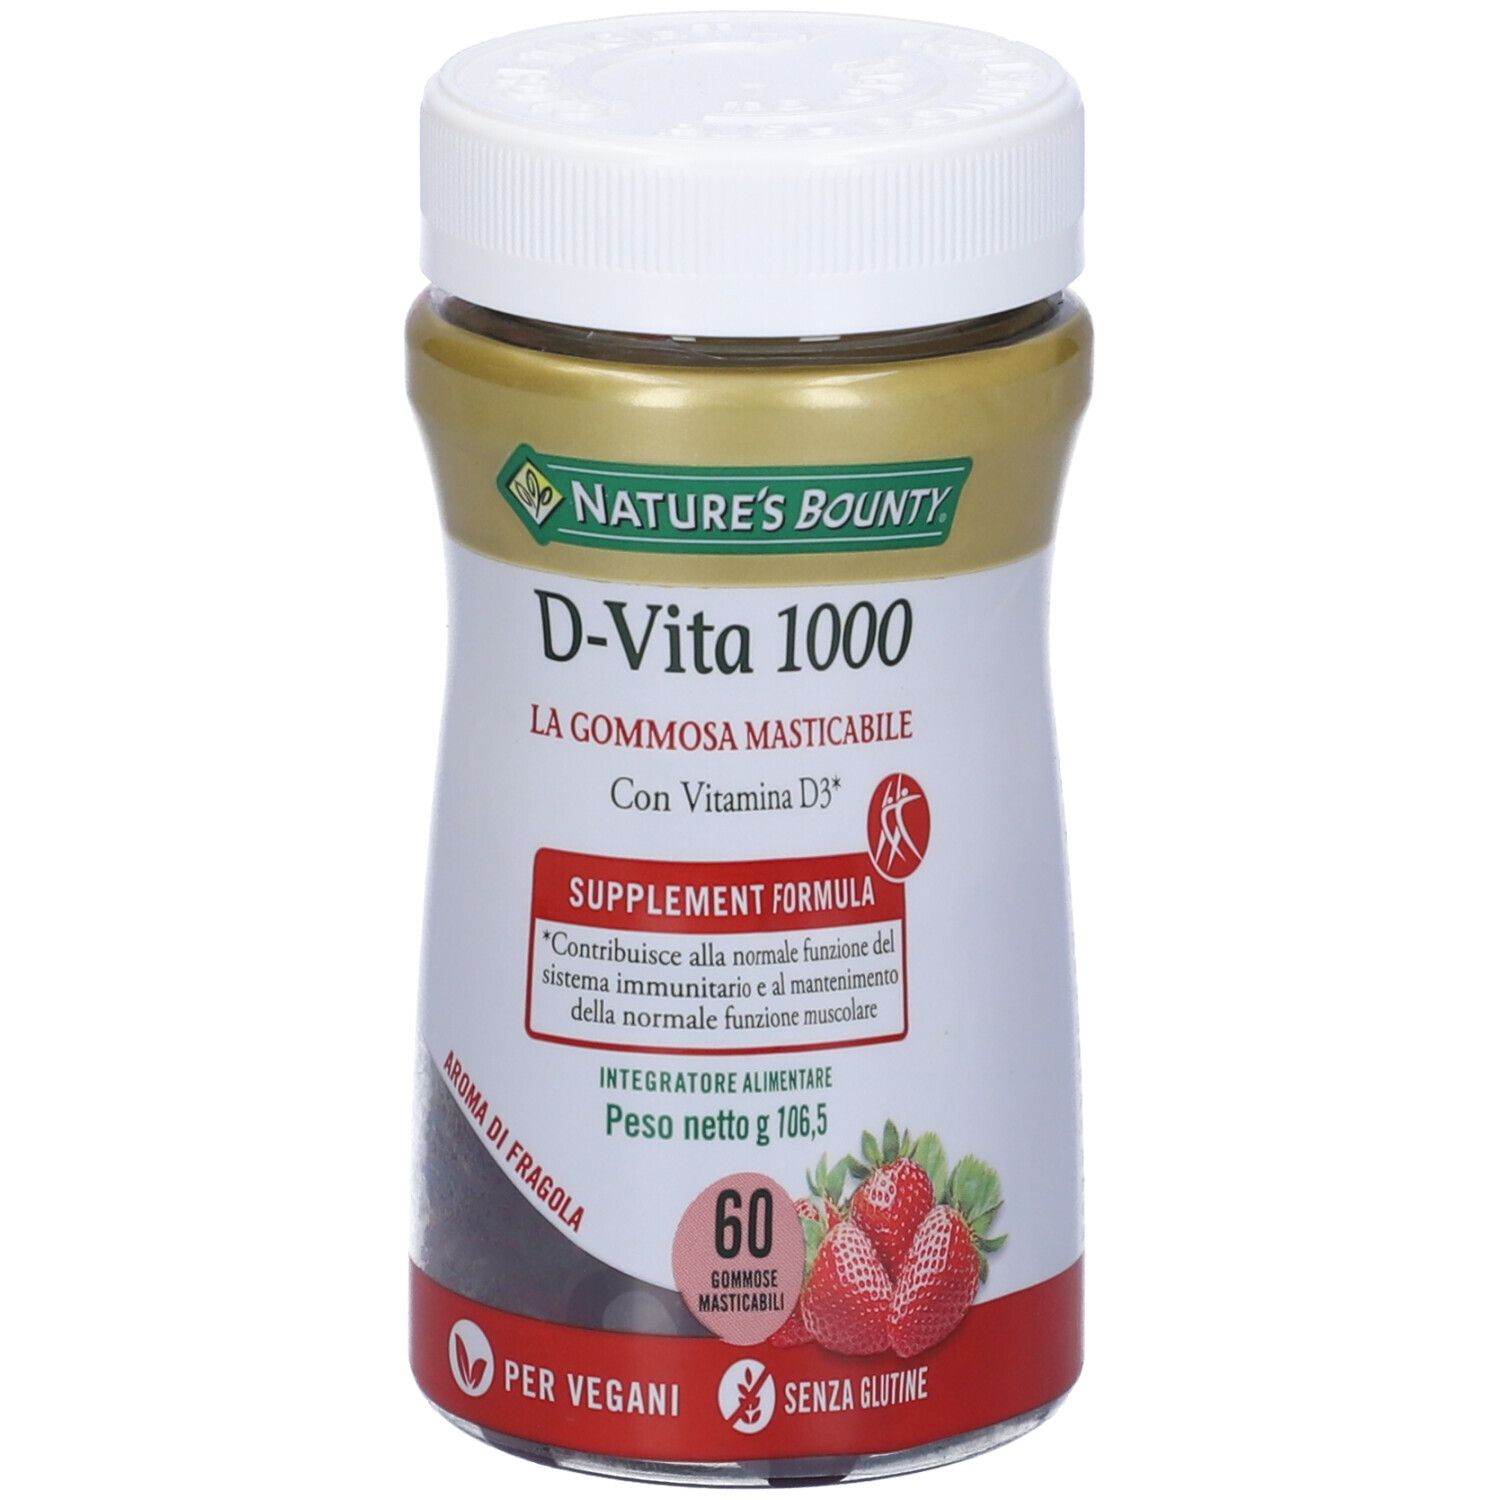 Nature's Bounty D-Vita 1000 - Gommose Masticabili Aroma Fragola